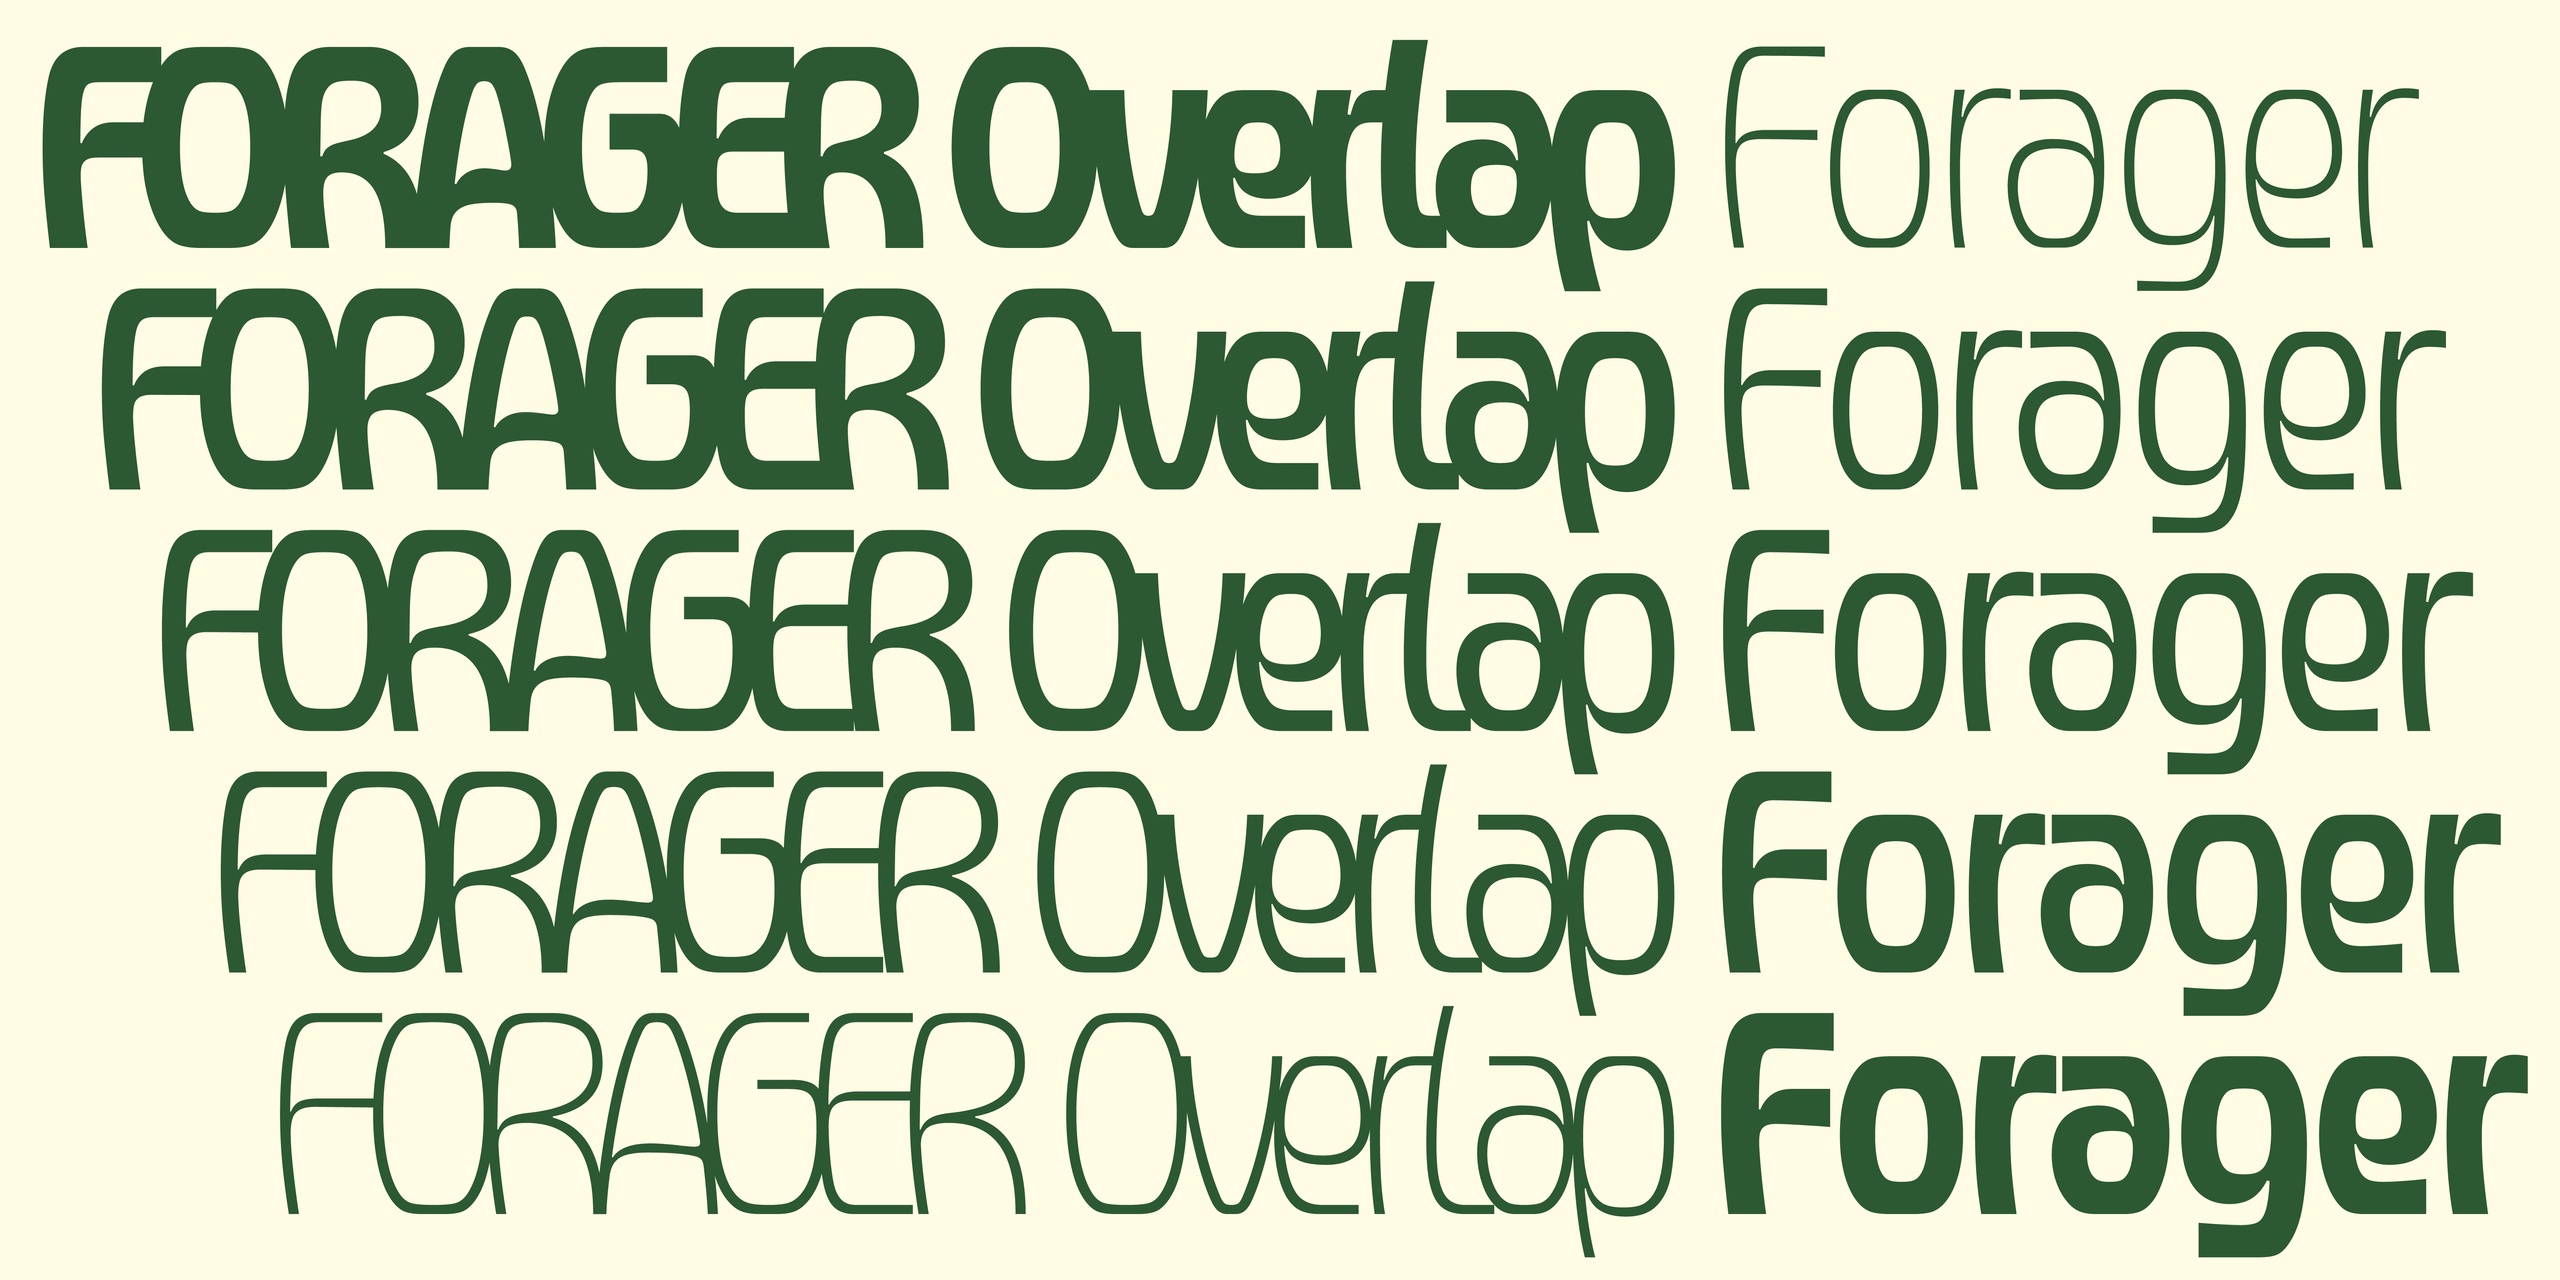 Пример шрифта Forager Bold Overlap